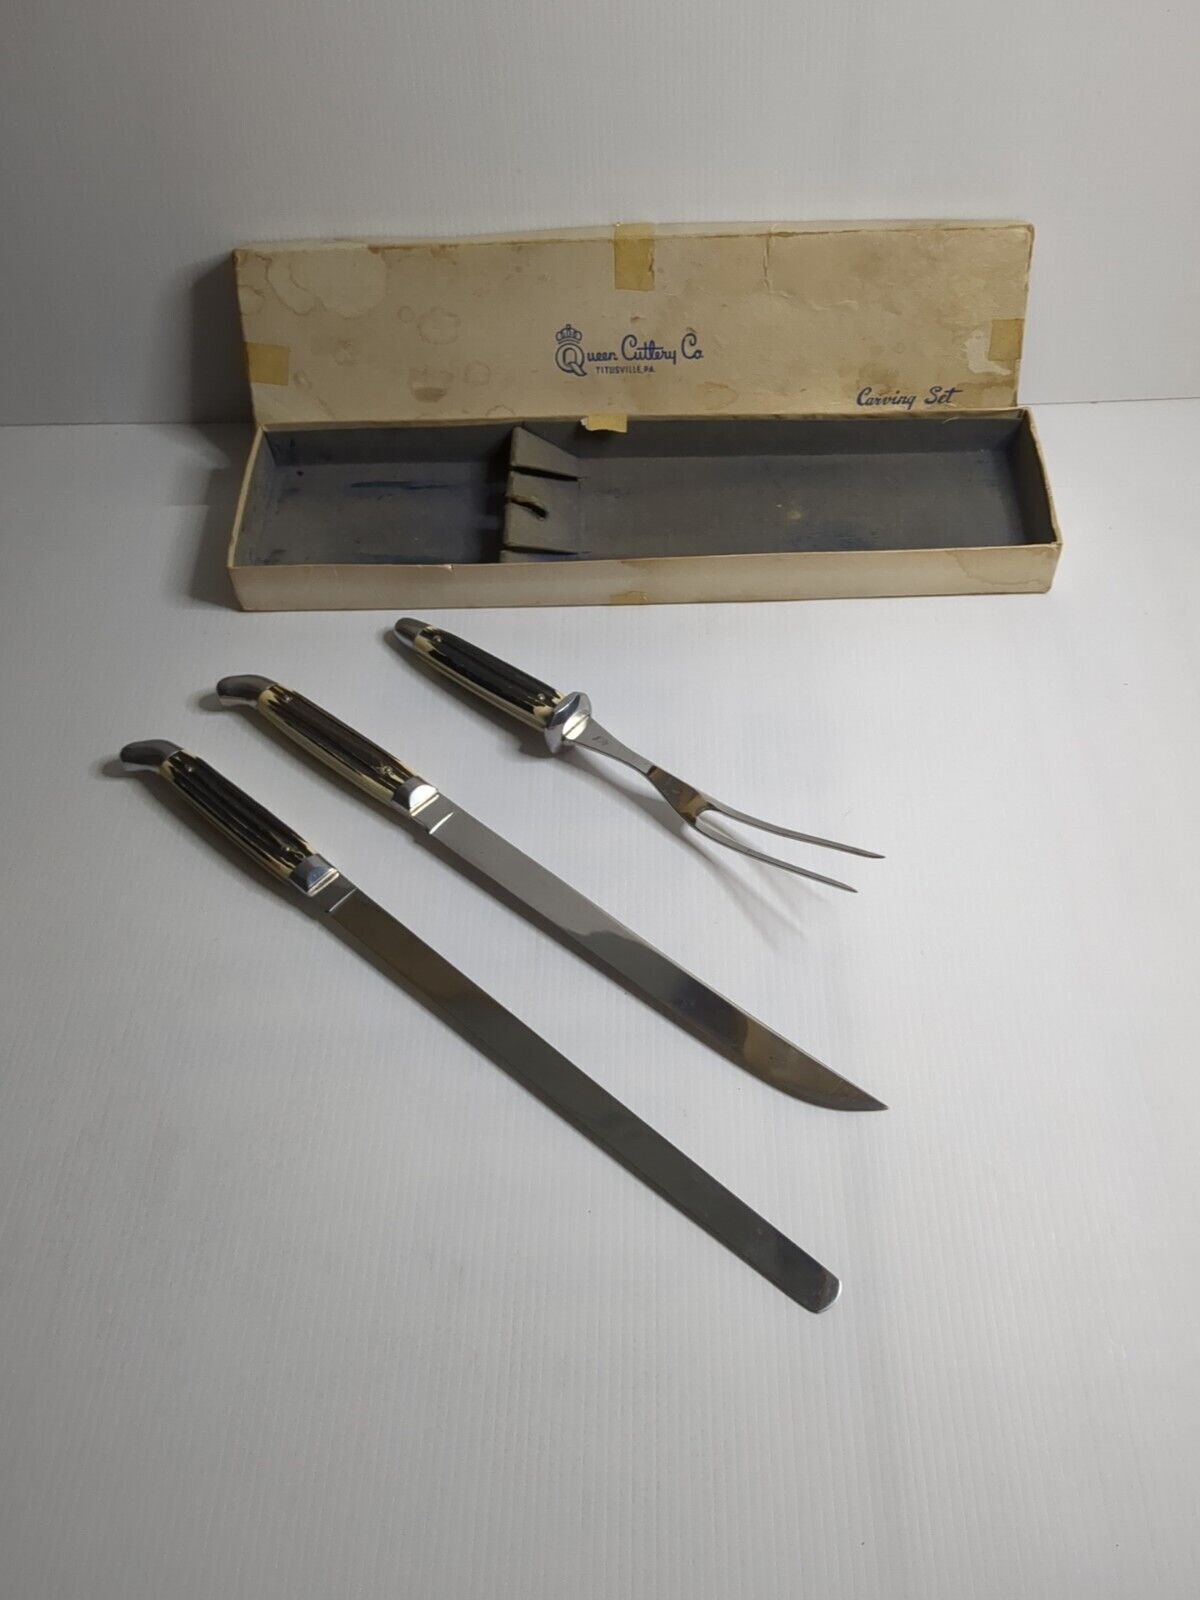 Vintage Queen Cutlery Company Carving Set